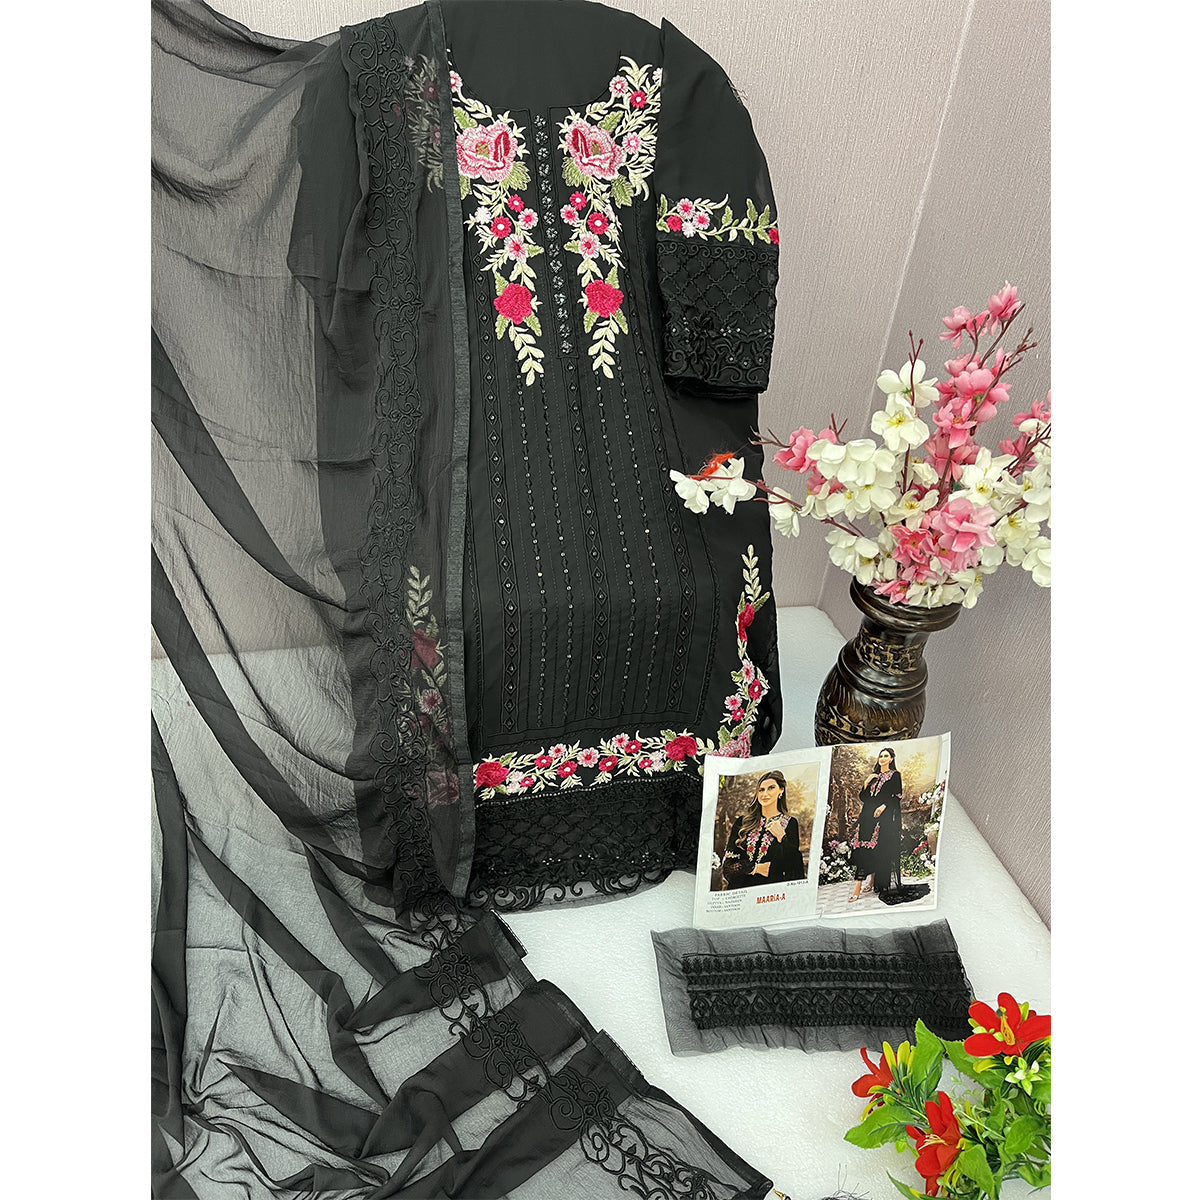 colour combination with black salwar suit for Sale OFF 66%